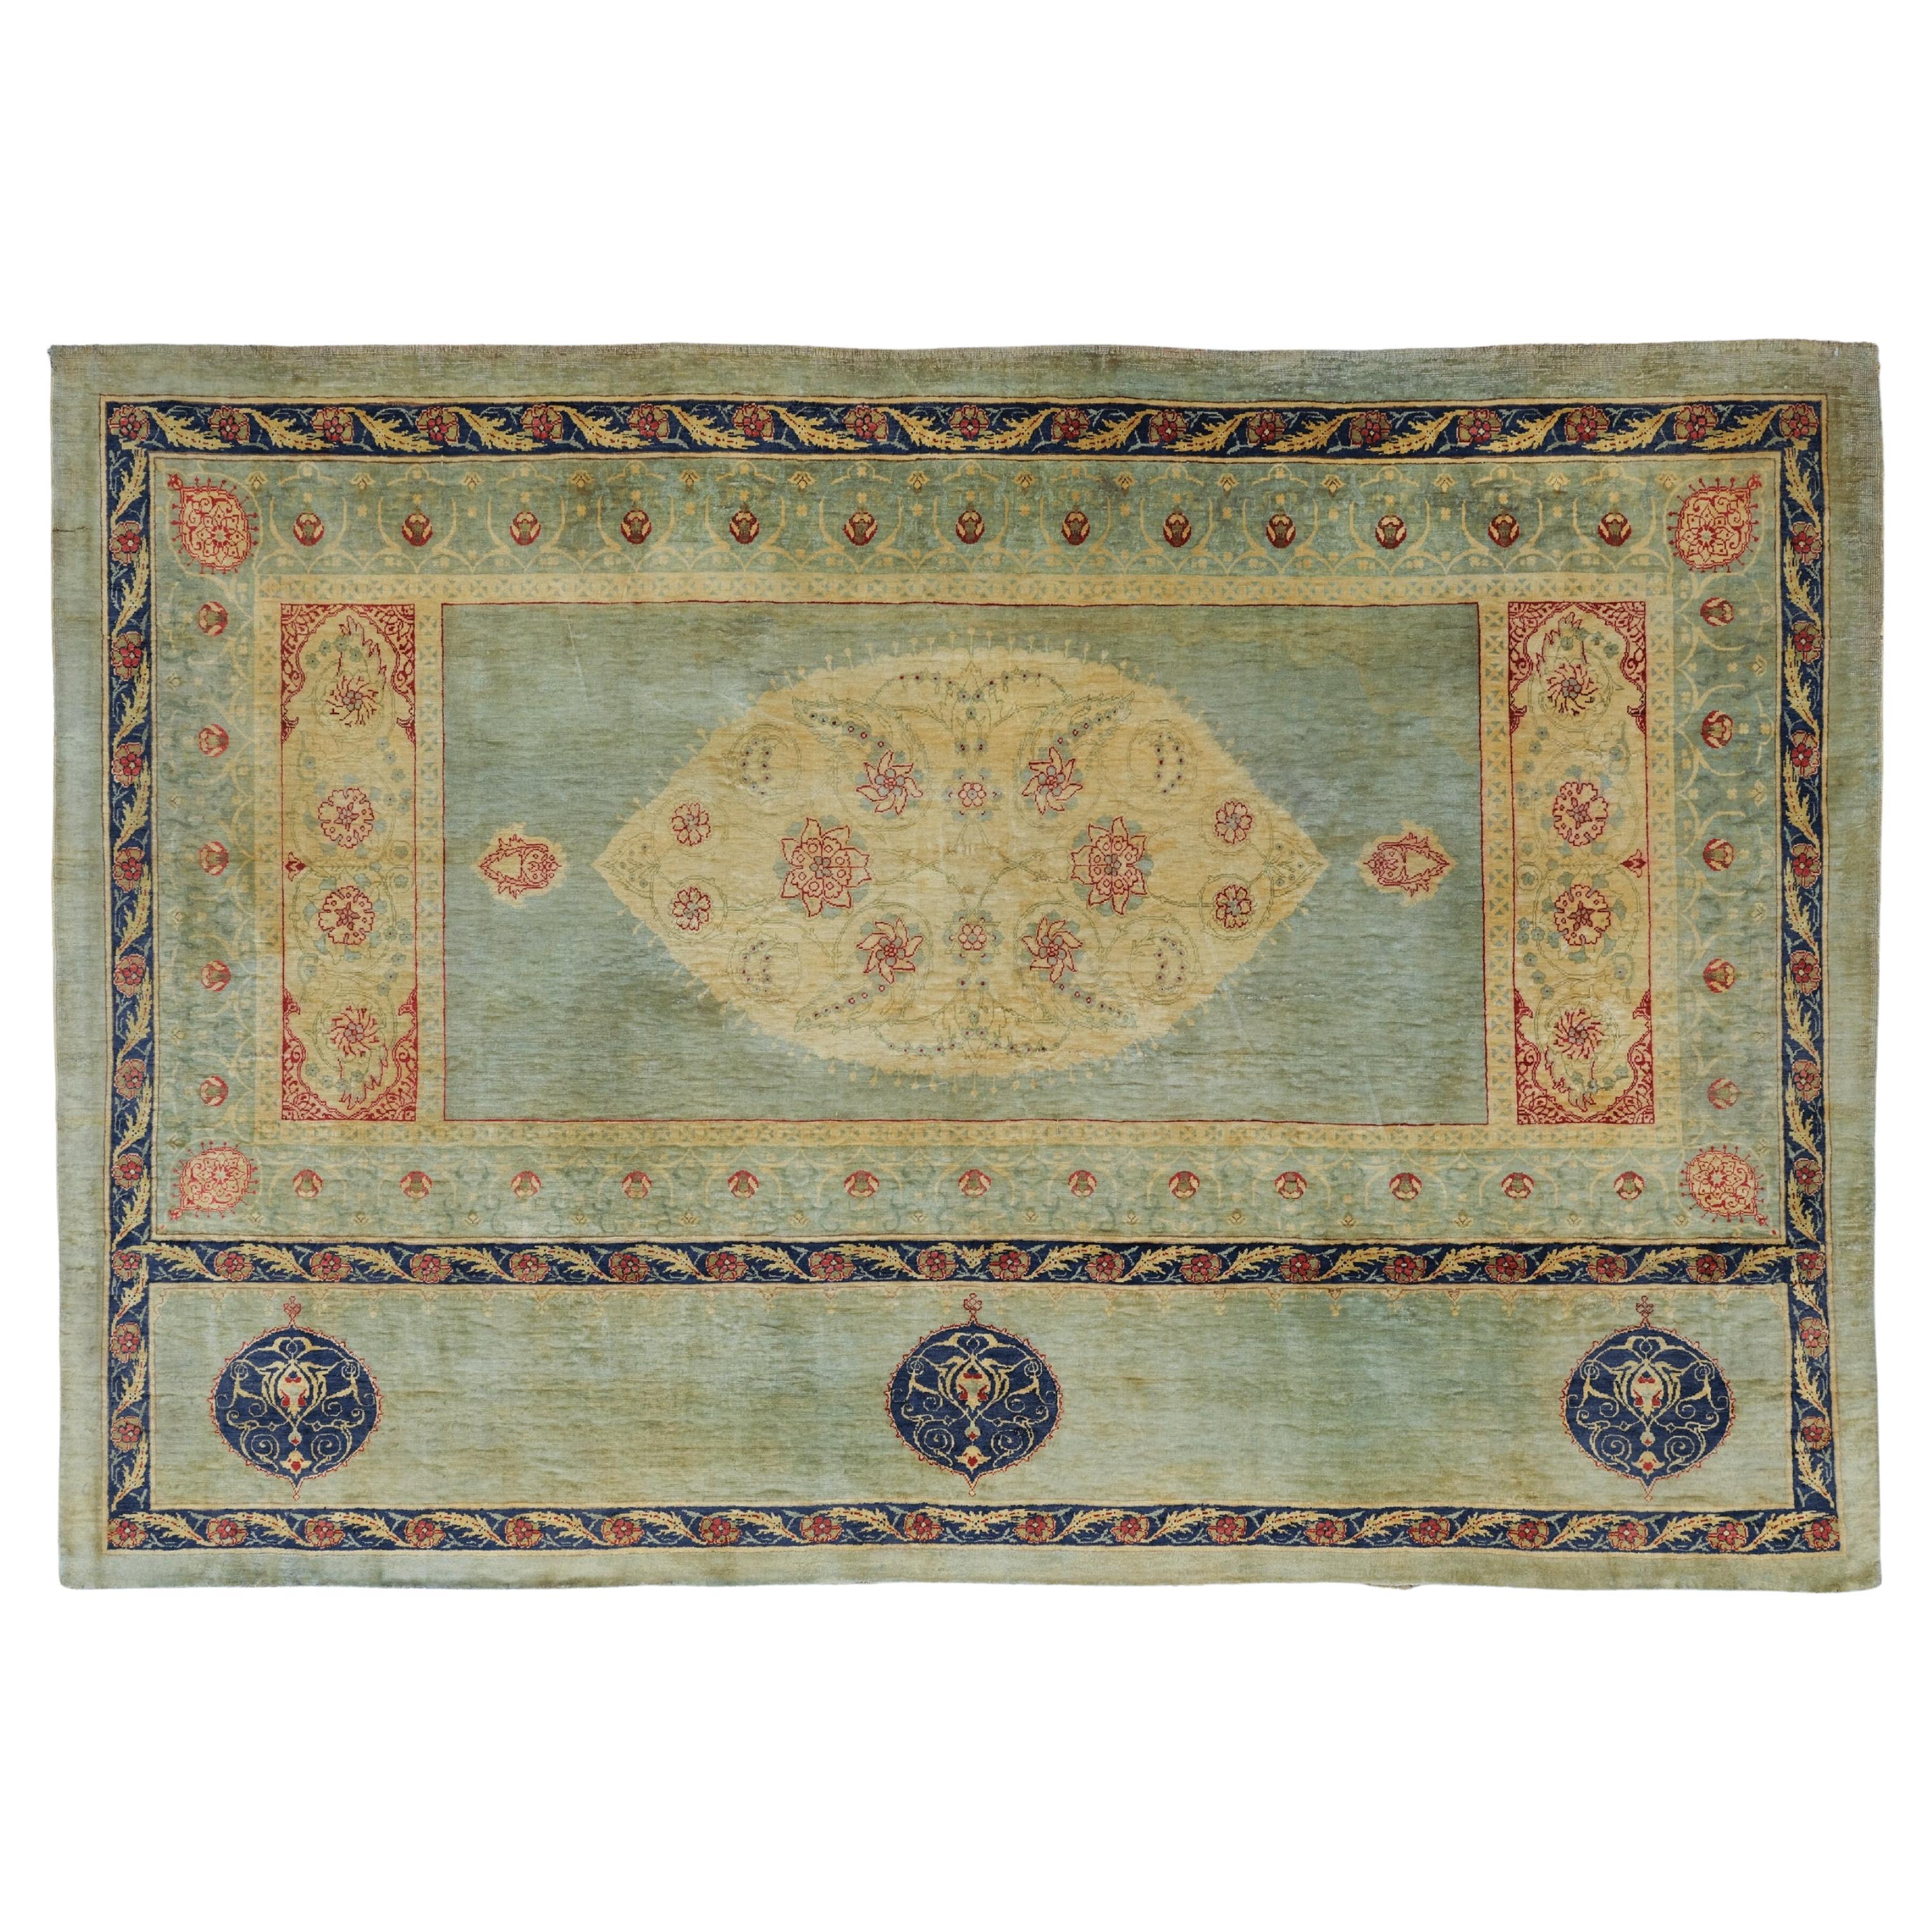 Late 19th Century Silk Feshane Quran-Qab Design Rug, Antique Rug, Handwoven Rug For Sale